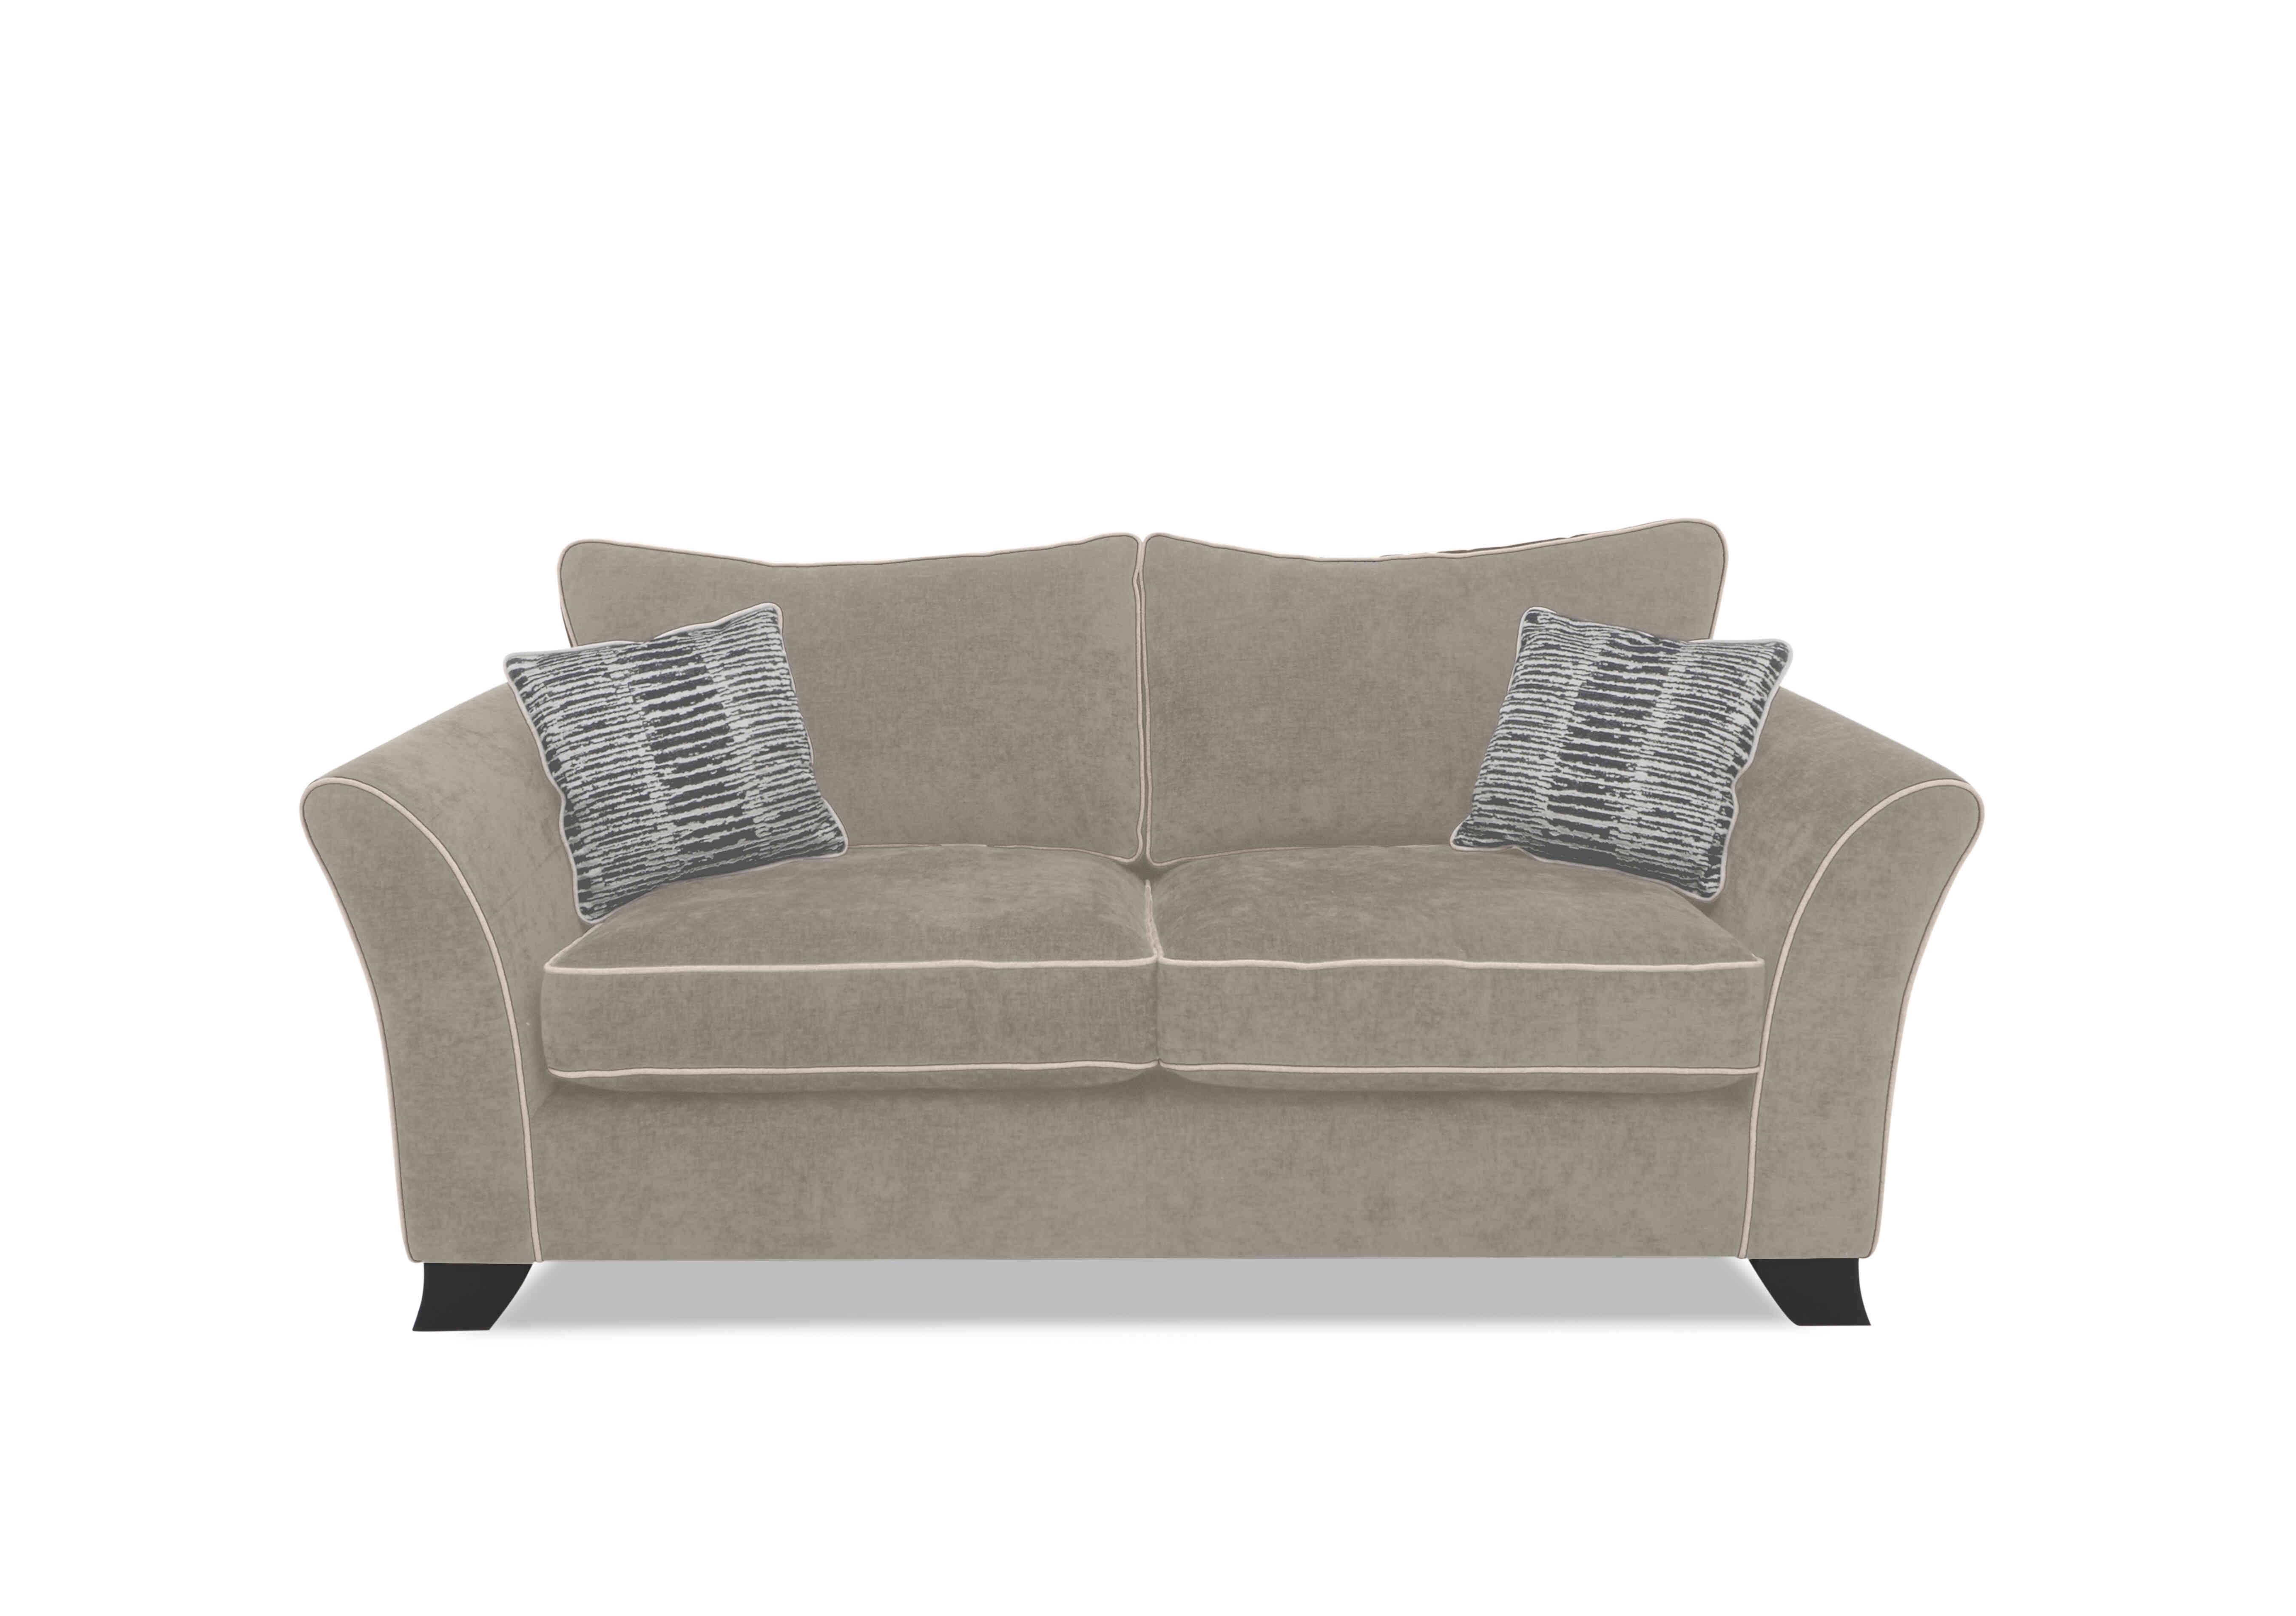 Stellar 3 Seater Classic Back Sofa Bed in Bolero Quill Contrast on Furniture Village